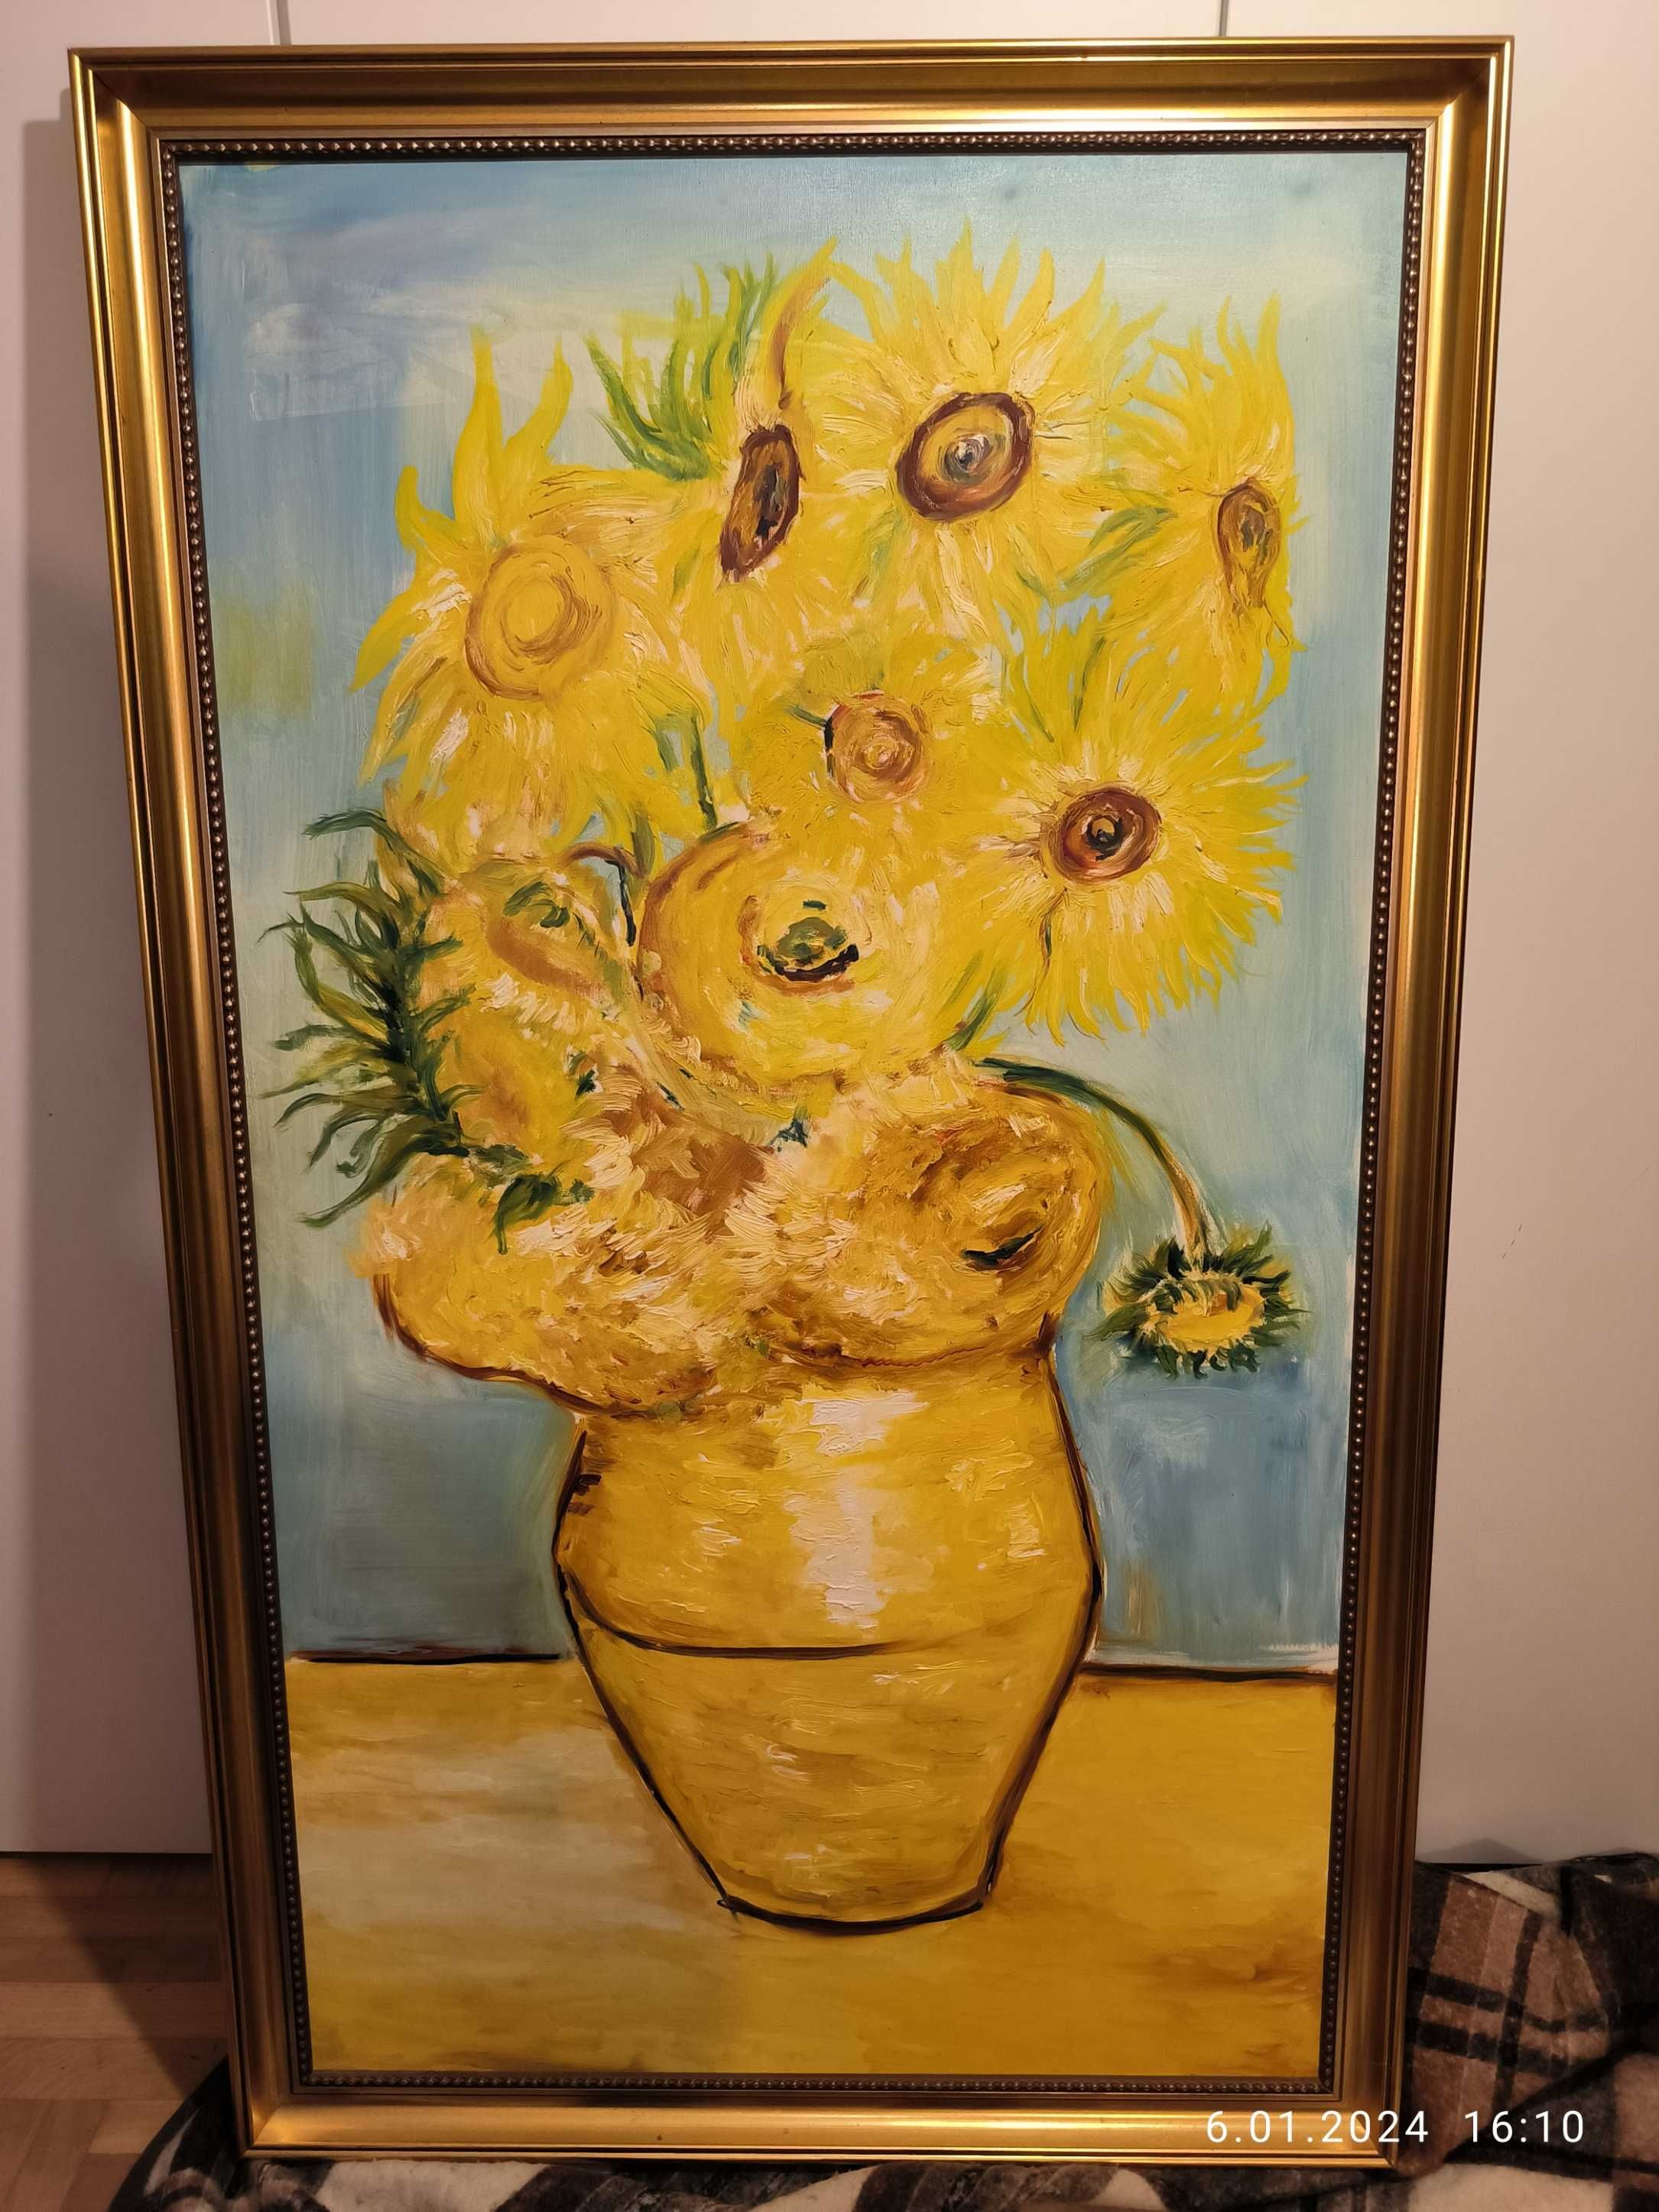 Obraz "Słoneczniki" 90x150cm Van Gogha